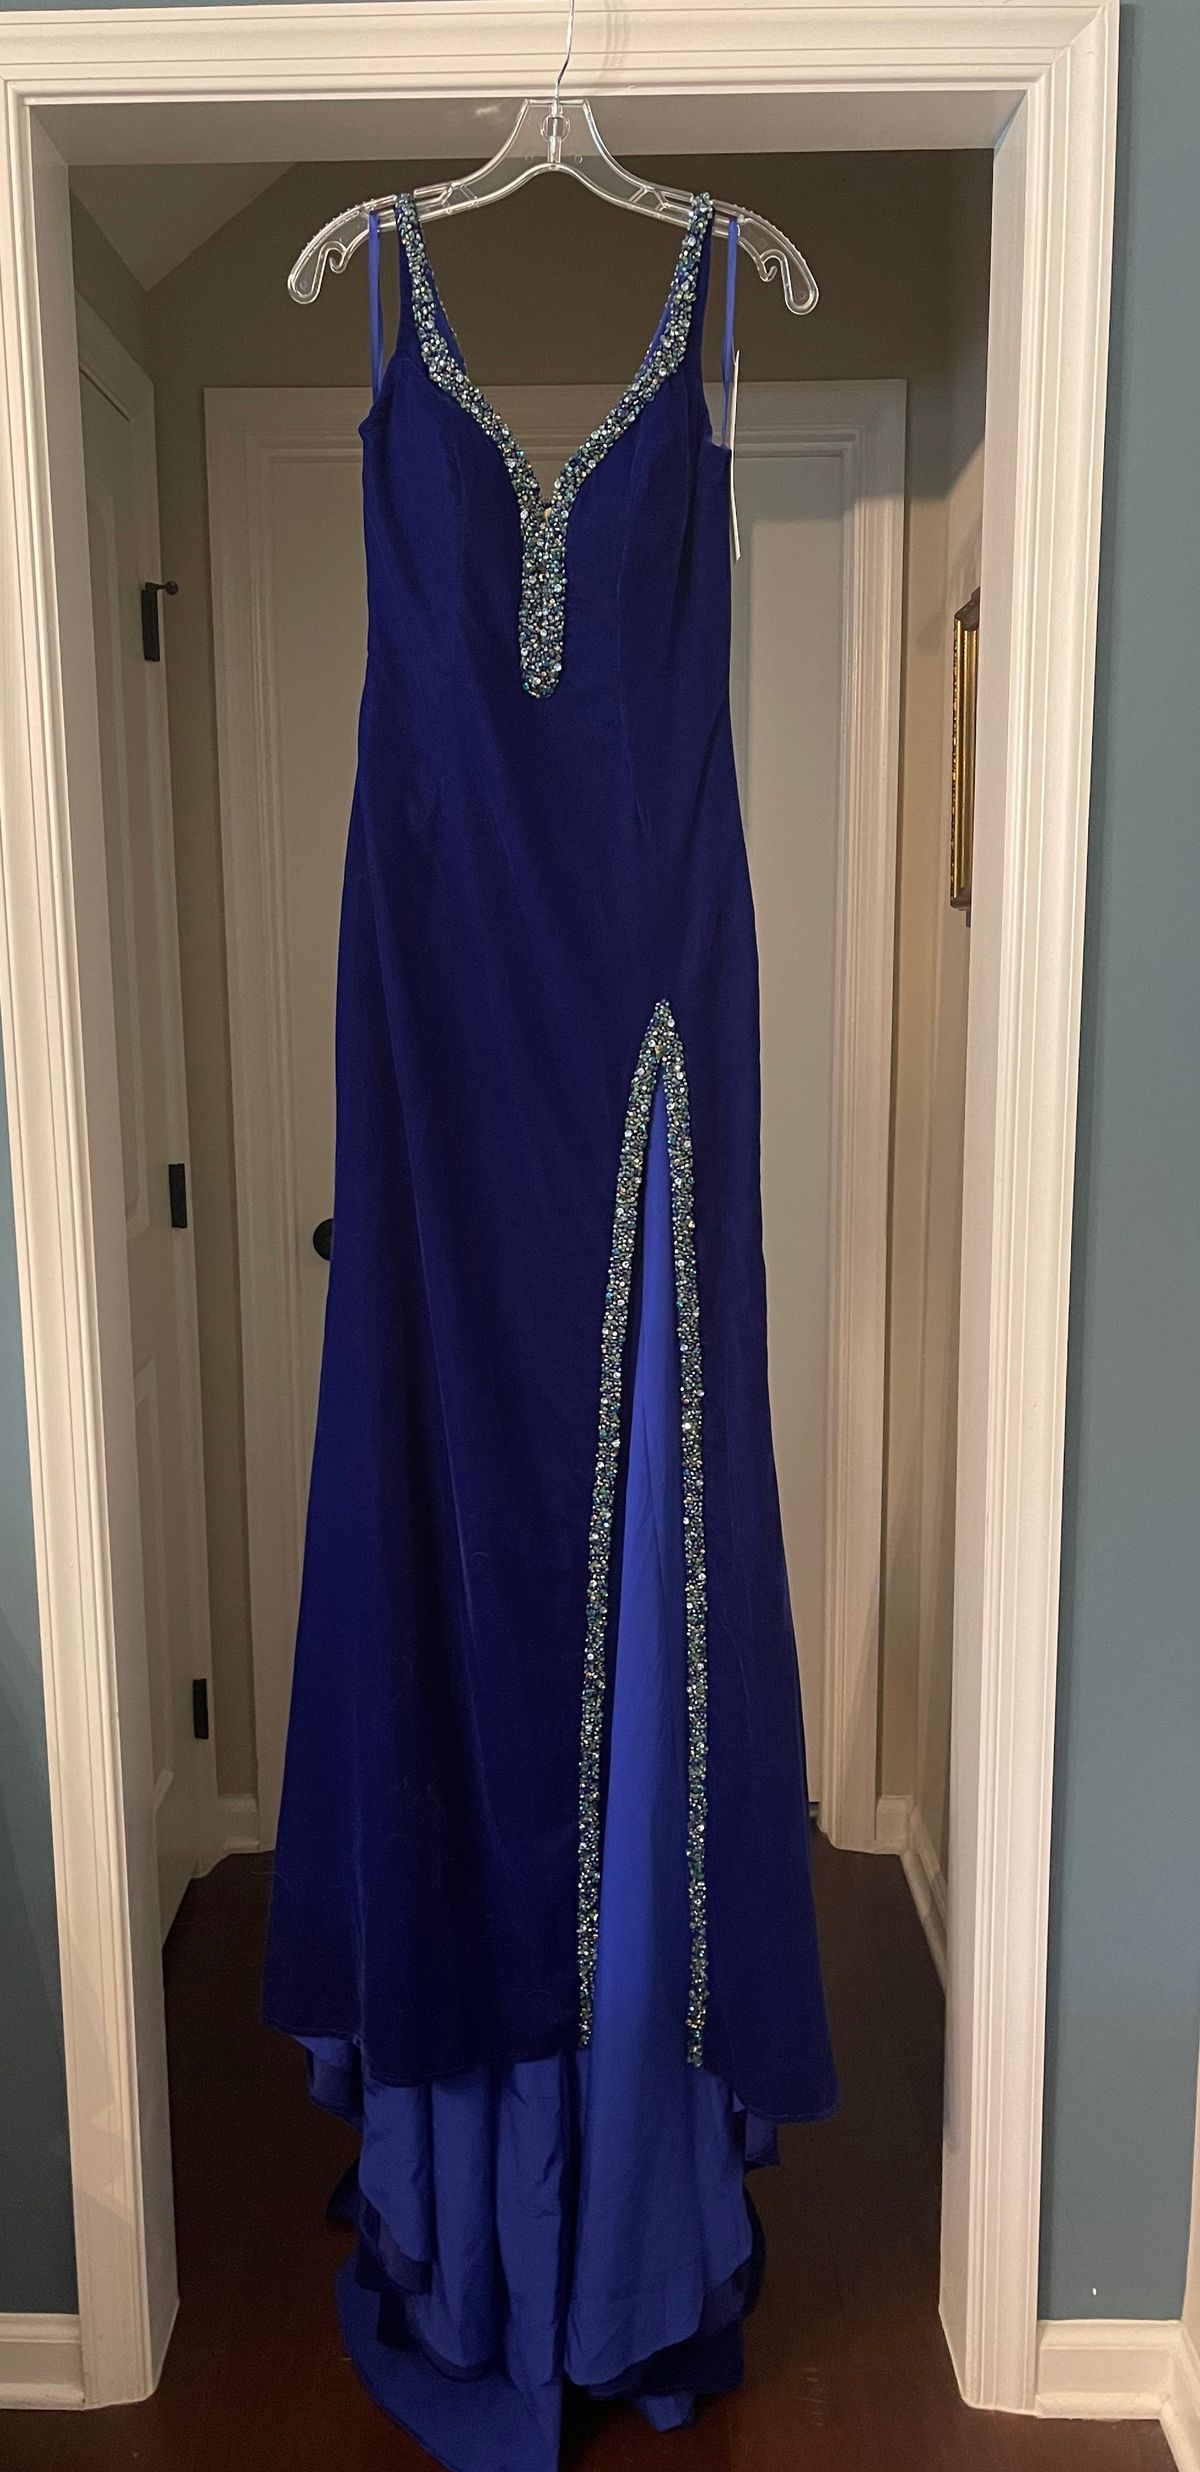 Style 11653 Ashley Lauren Size 2 Plunge Blue Side Slit Dress on Queenly